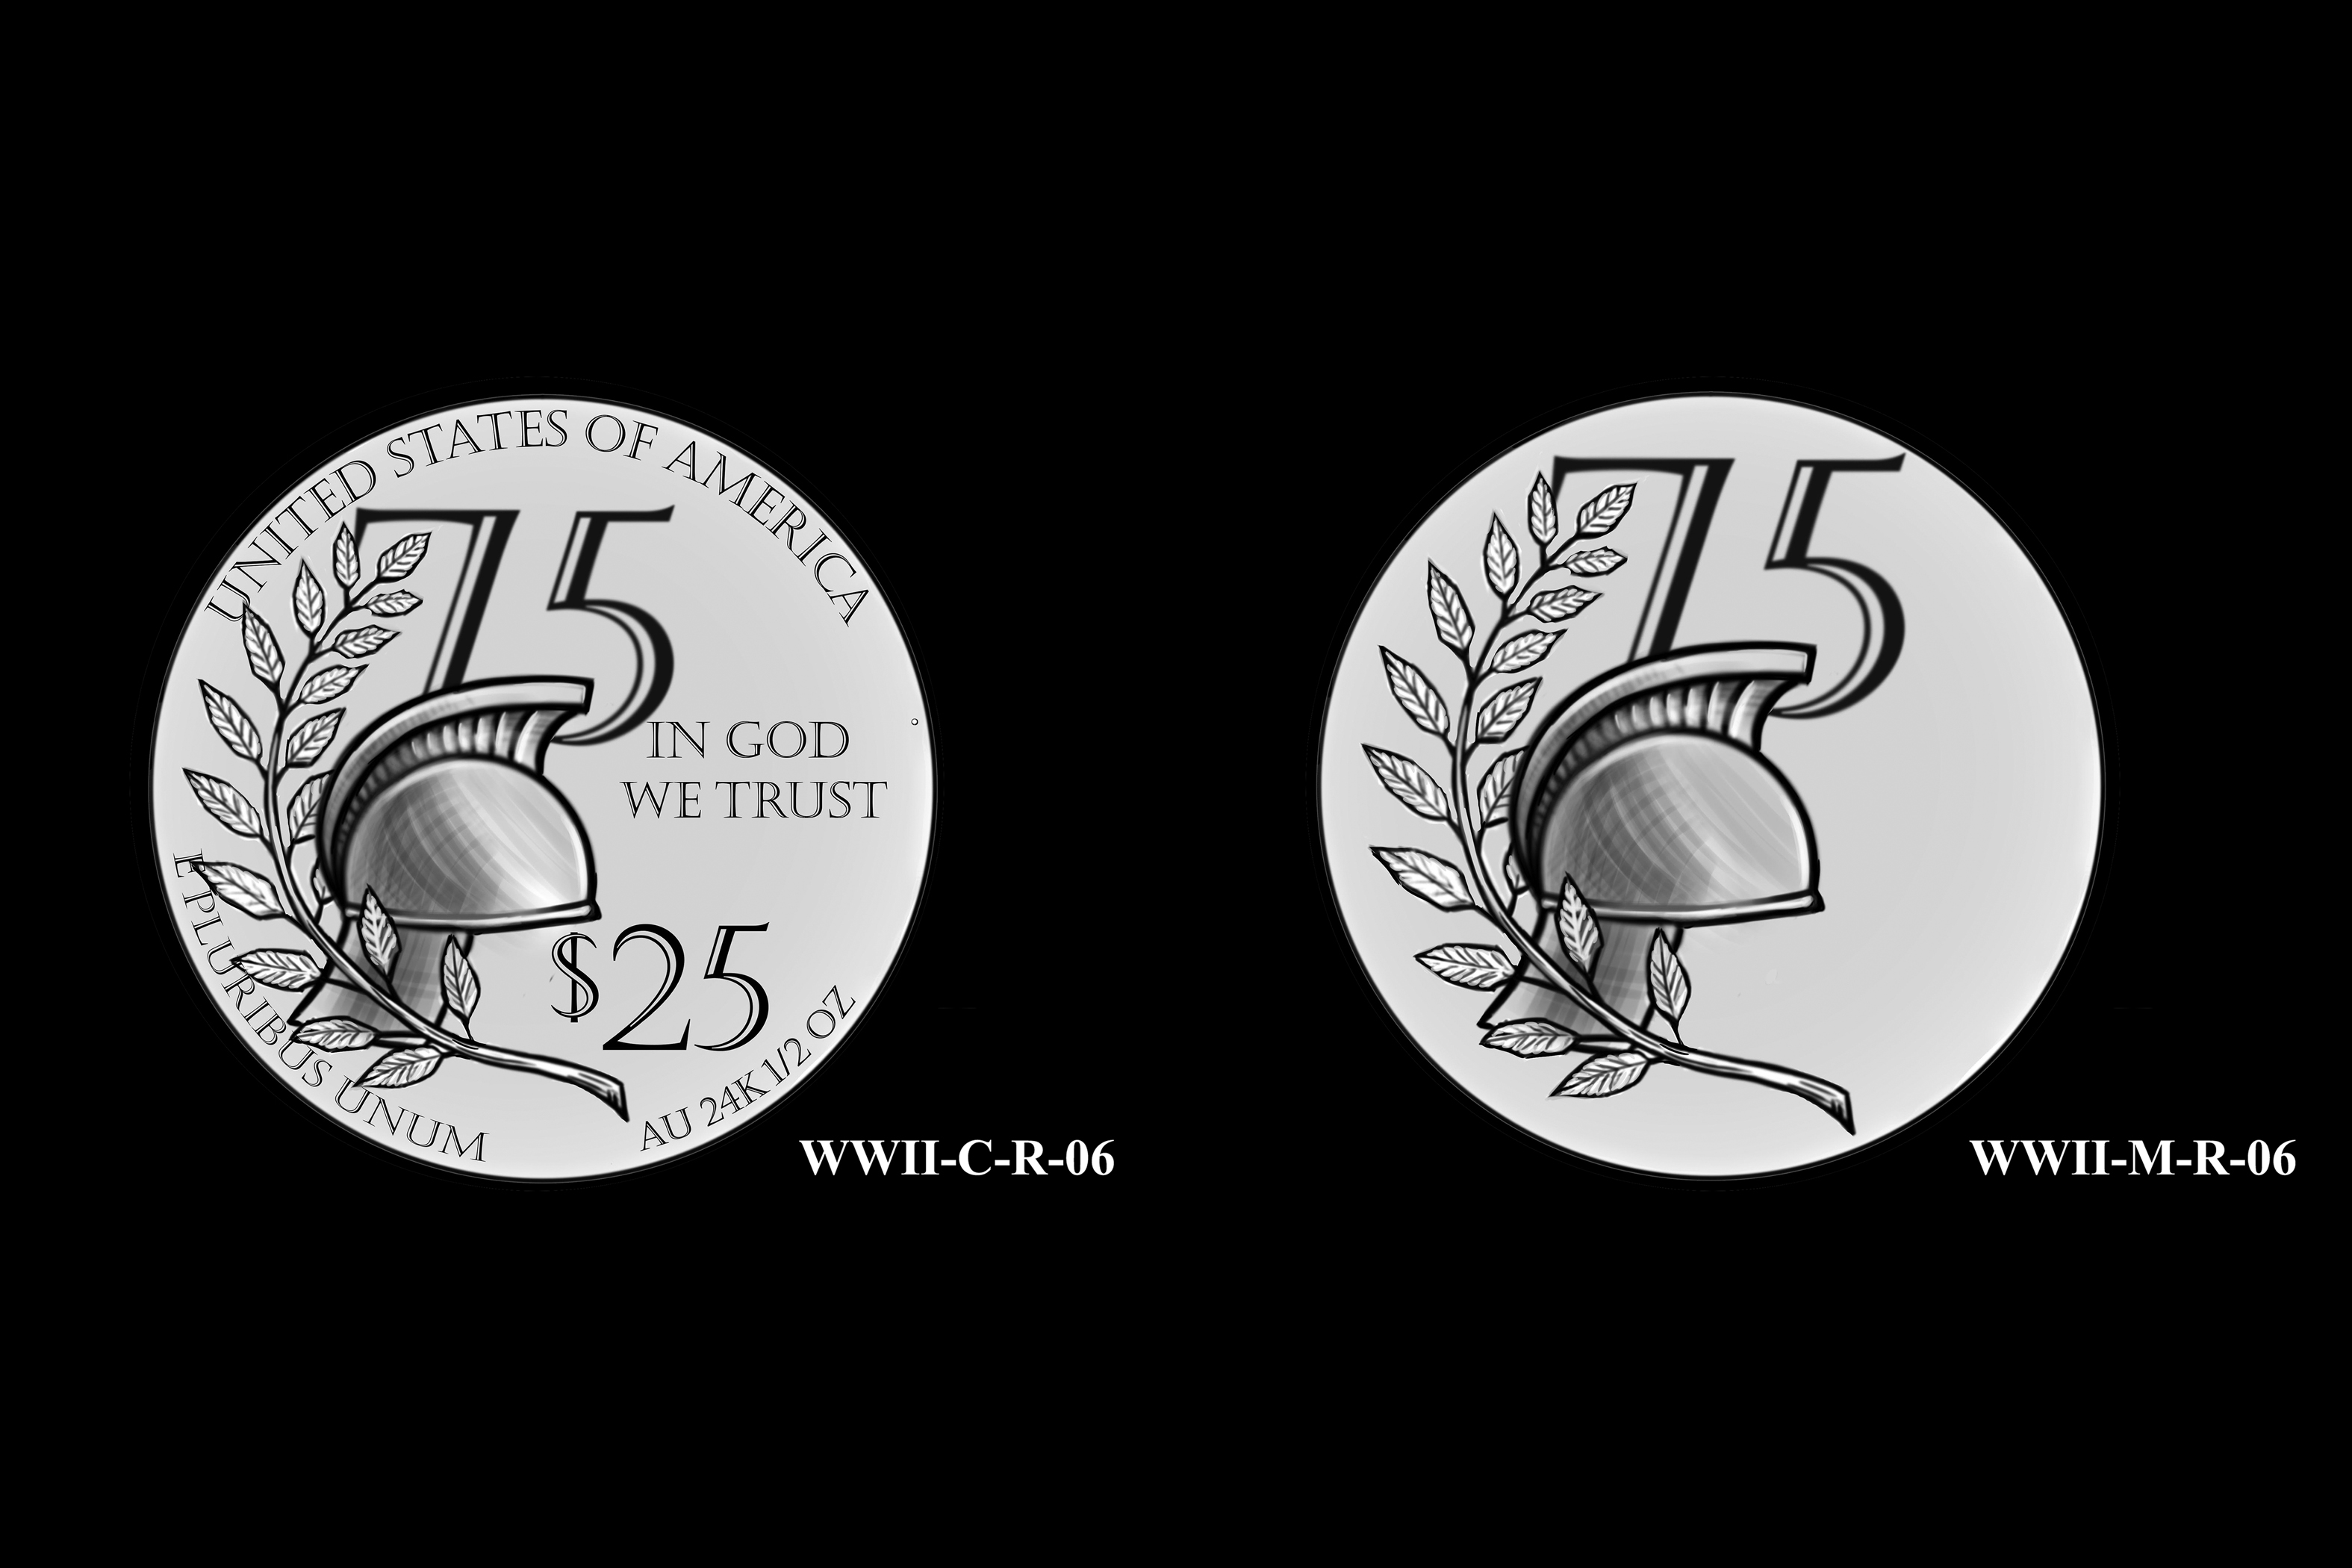 WWII-C-R-06 and WWII-M-R-06 -- End of World War II 75th Anniversary Program - Reverse